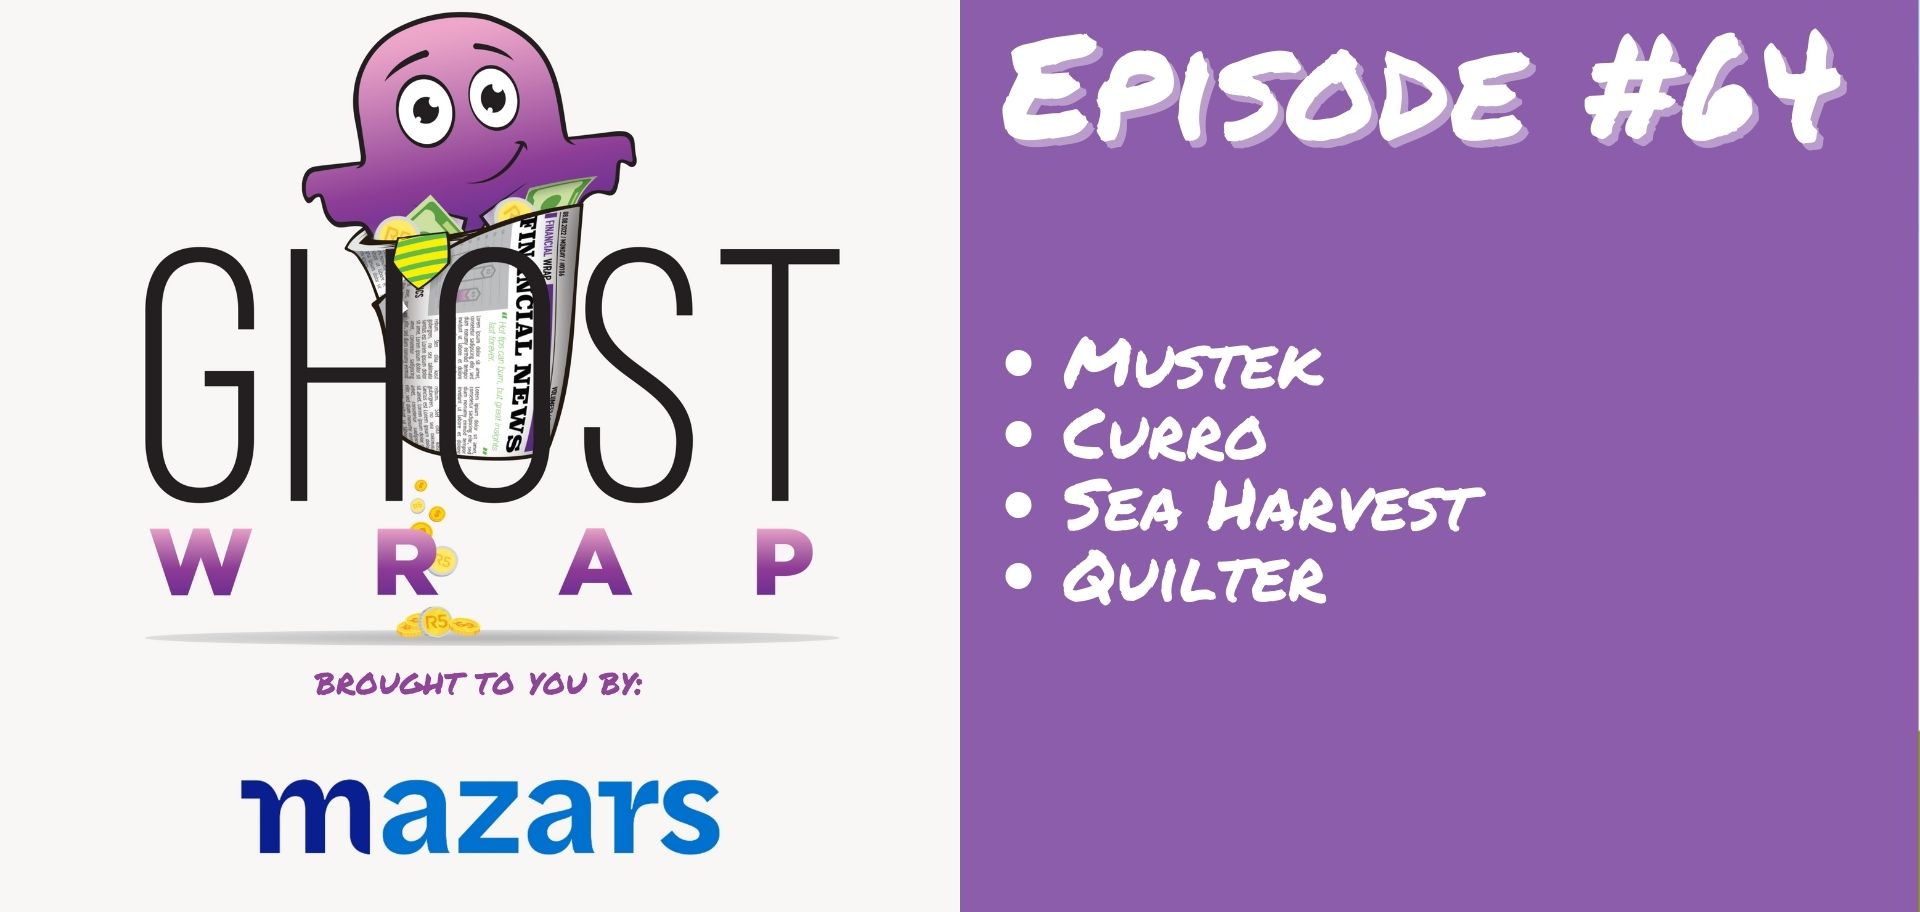 Ghost Wrap #64 (Mustek | Curro | Sea Harvest | Quilter)